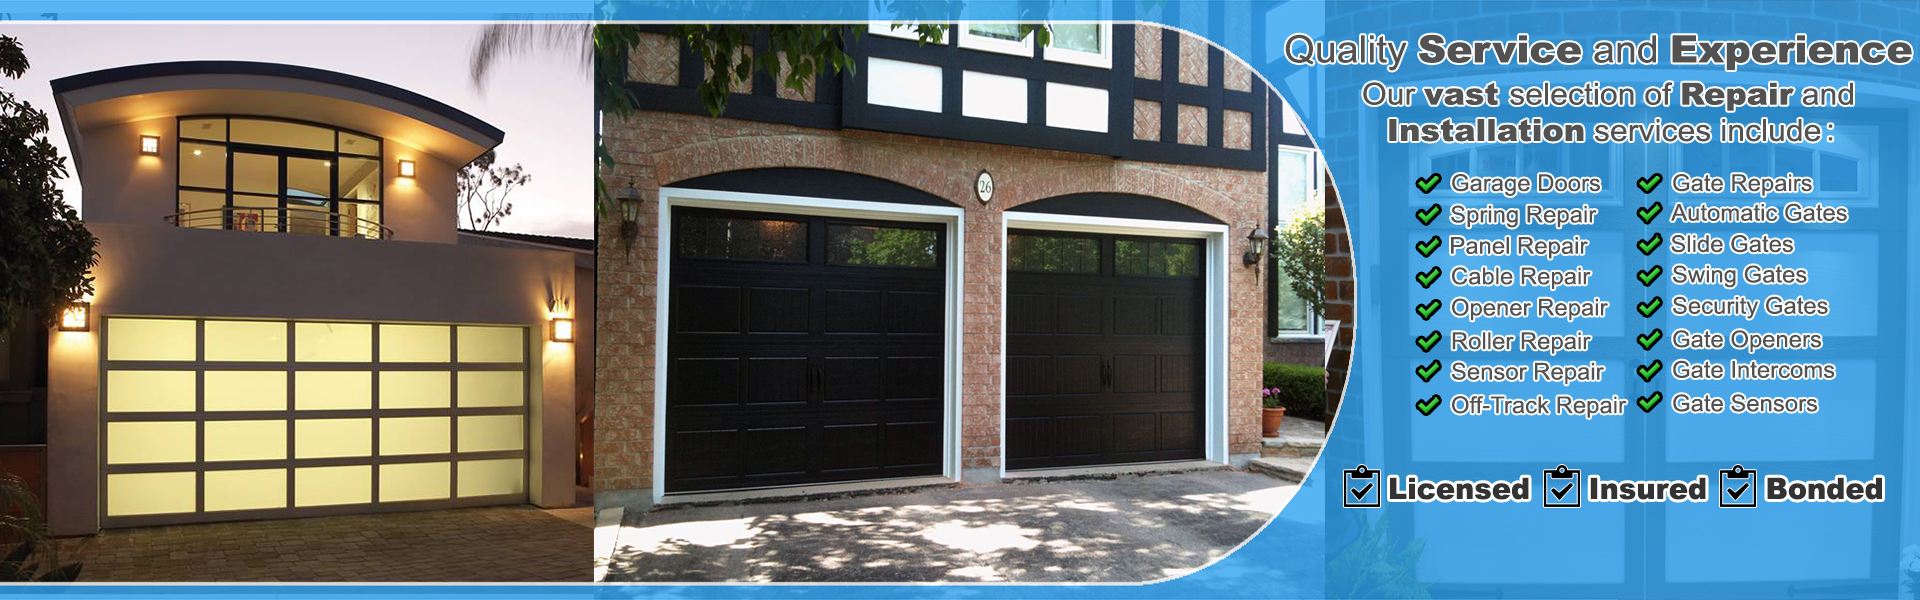 Garage Door Repair Gladstone OR Services